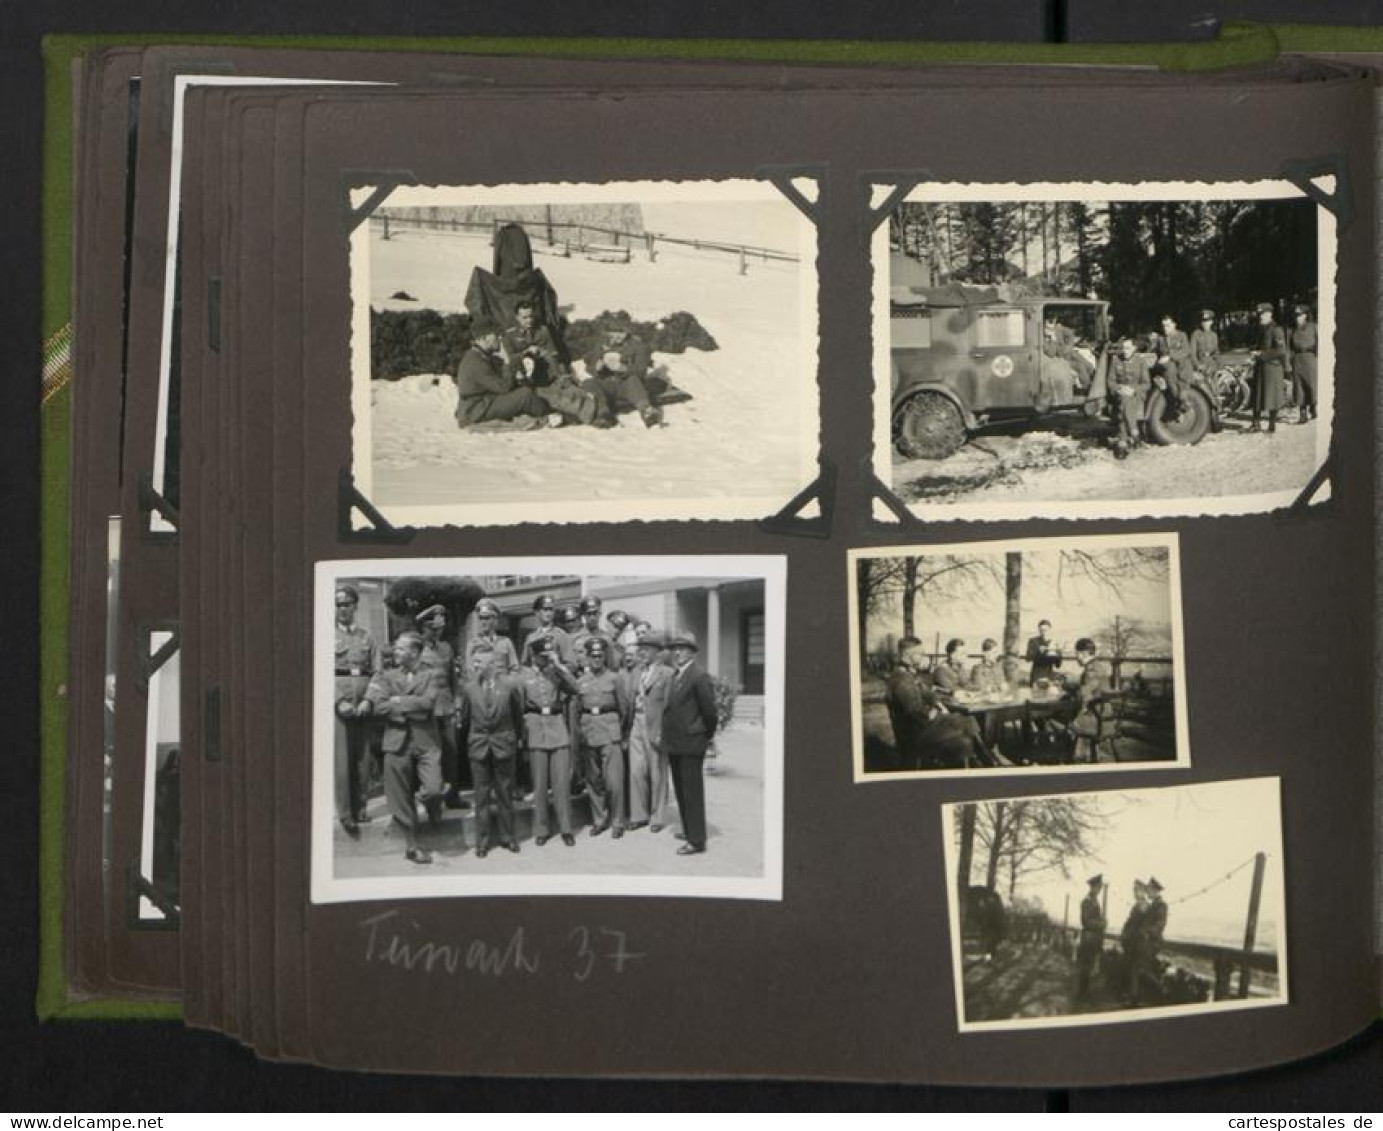 Fotoalbum mit 150 Fotografien, Giessen Studenten, Theater, Militär, Soldaten, Fussball, Wappen 